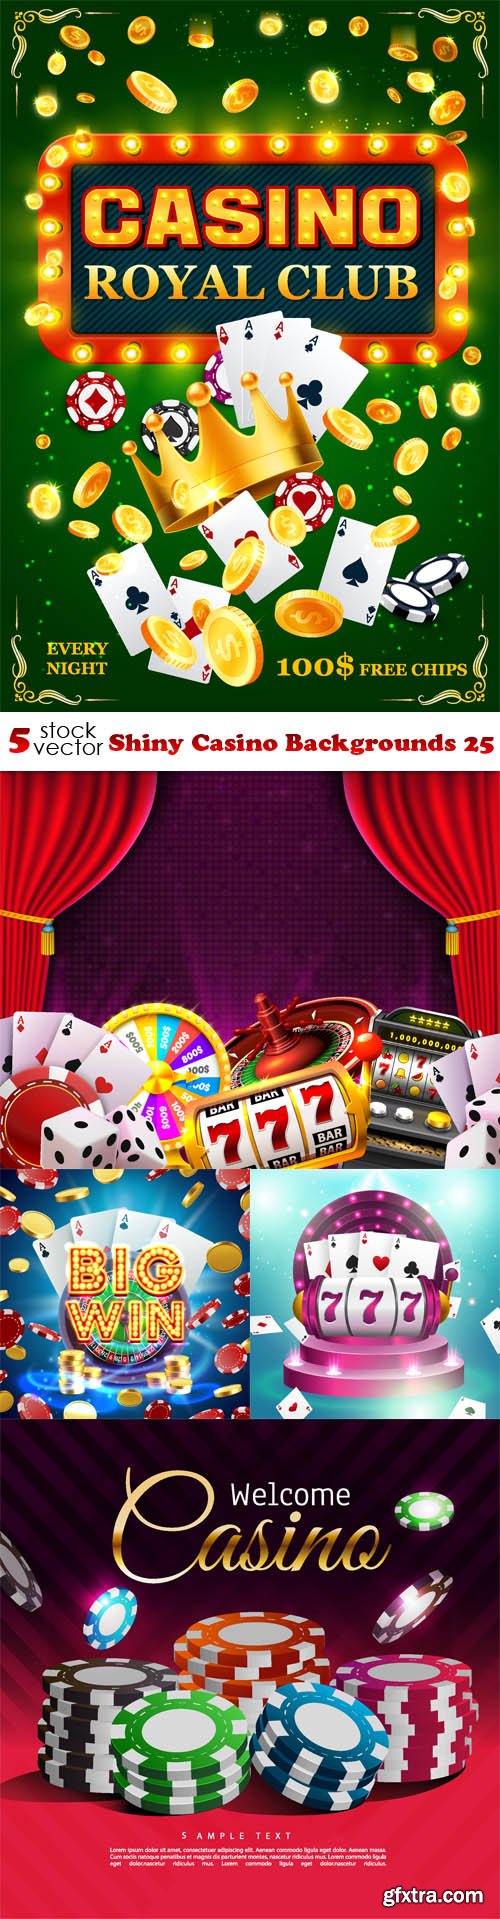 Vectors - Shiny Casino Backgrounds 25